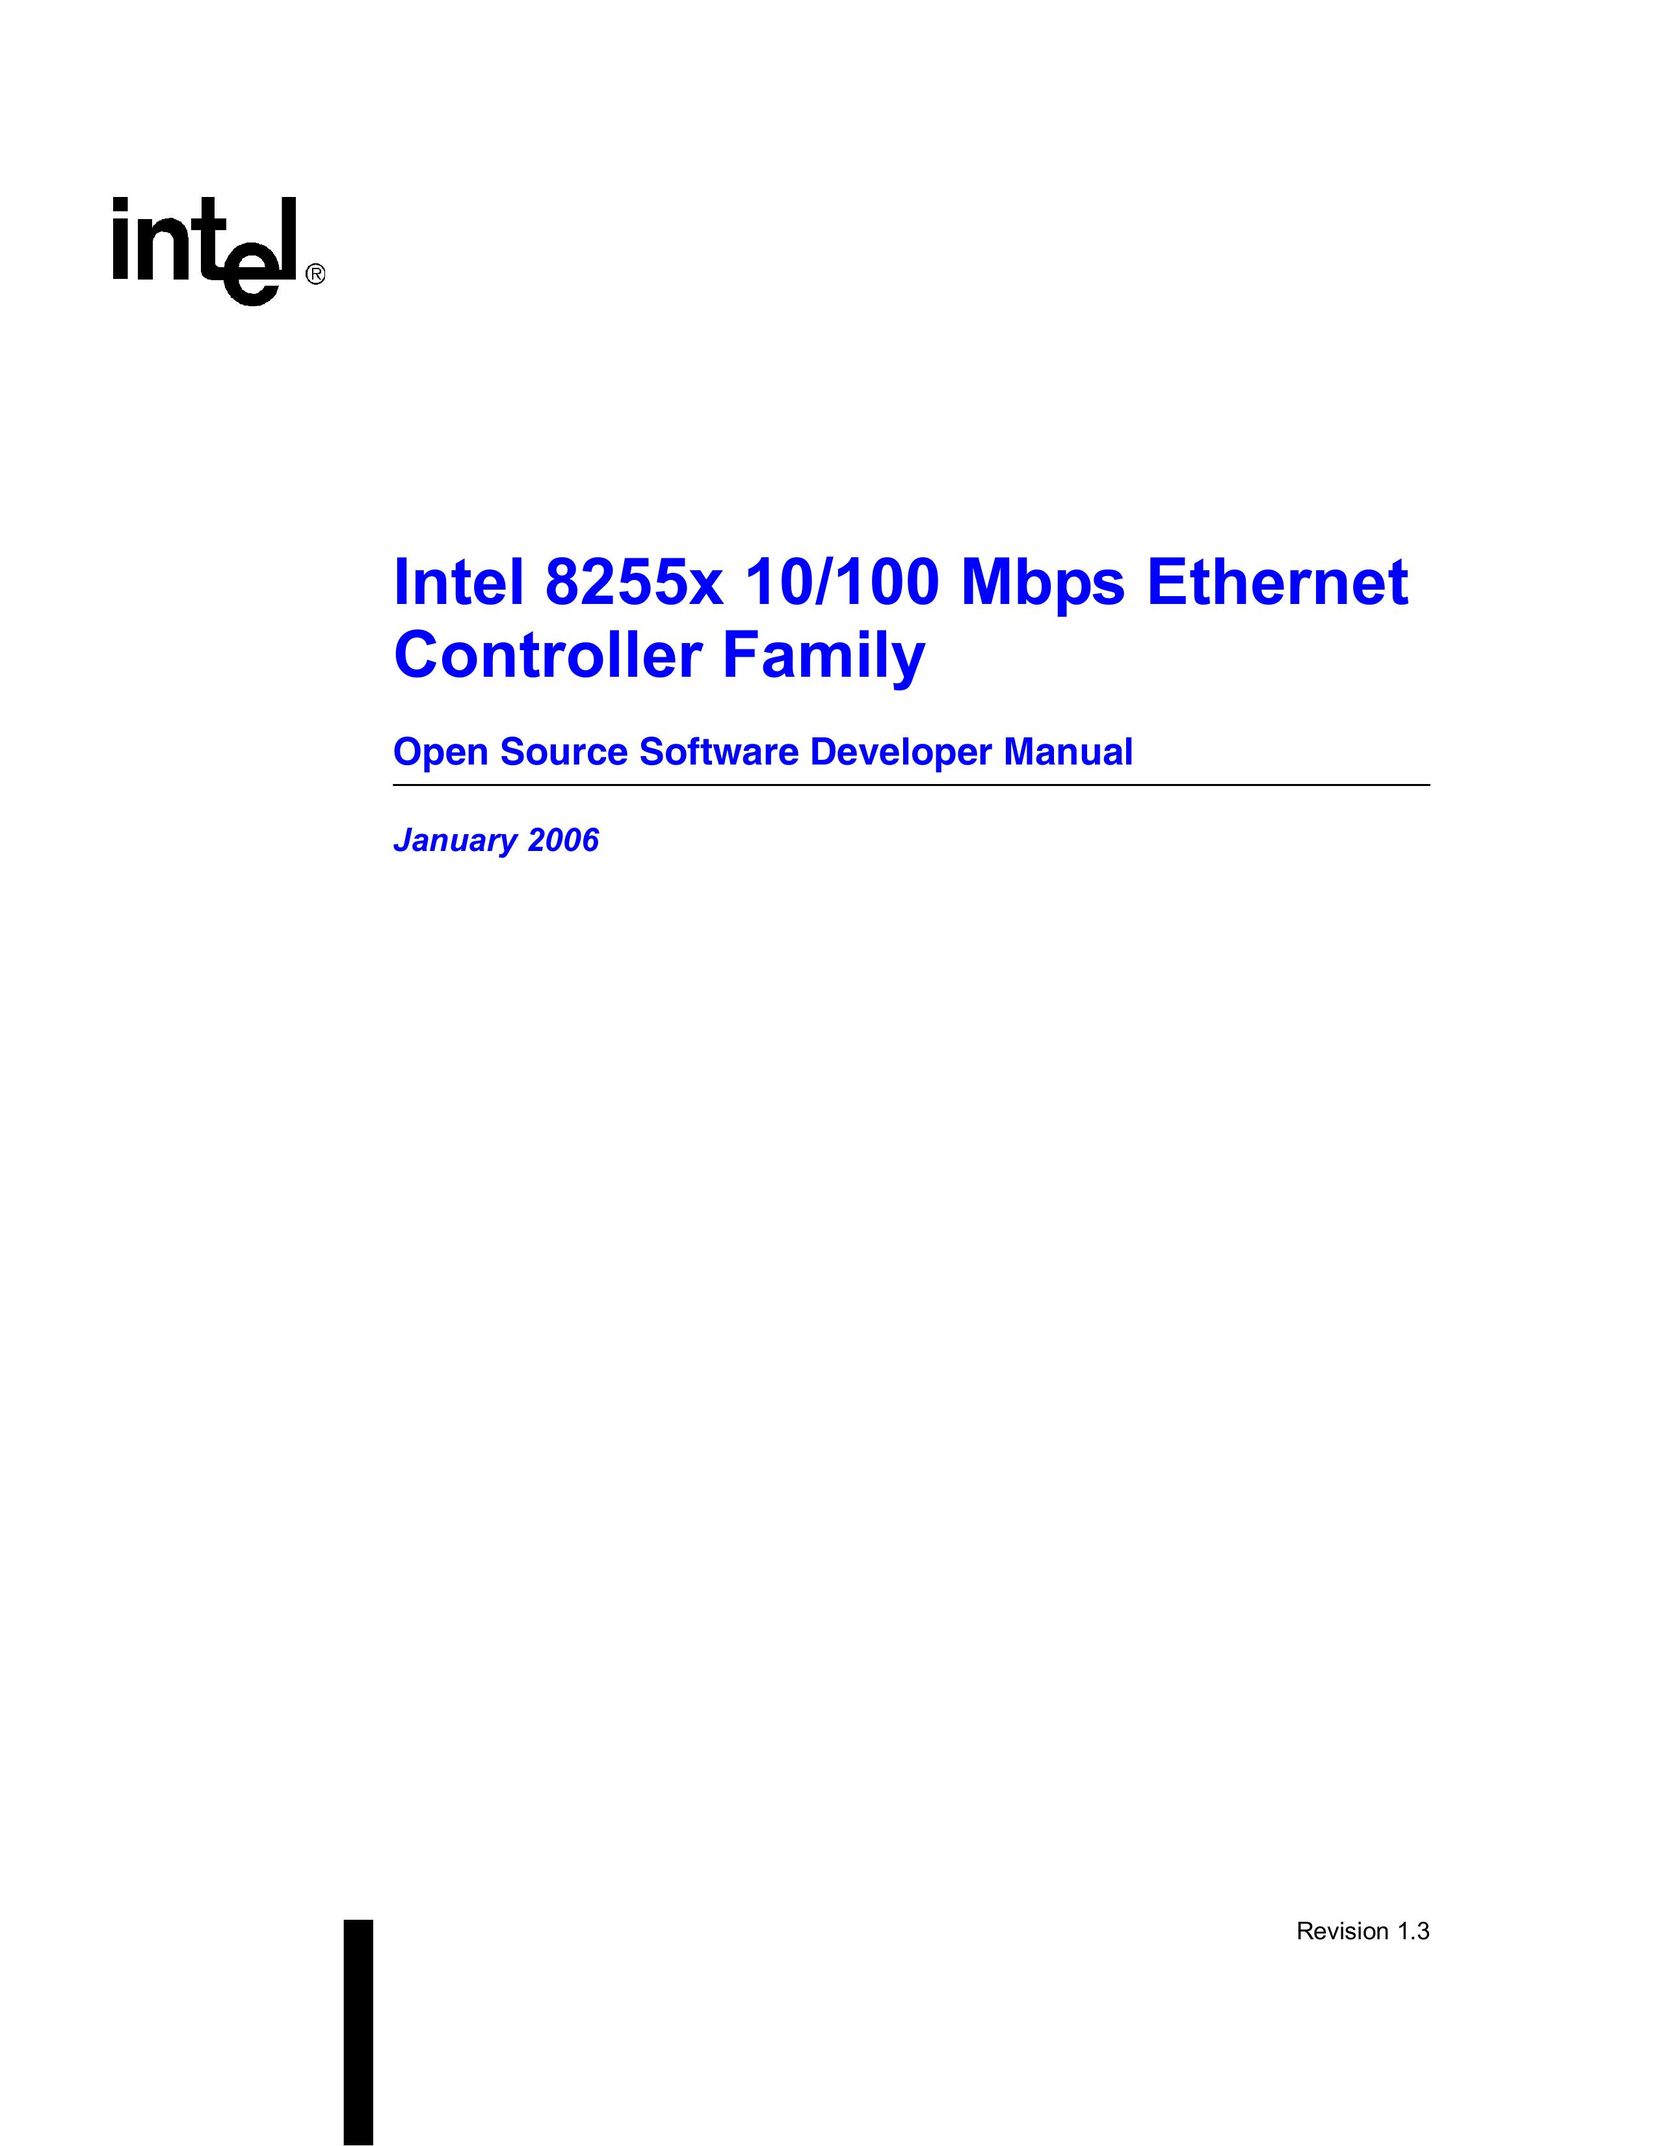 Intel 82551 Switch User Manual